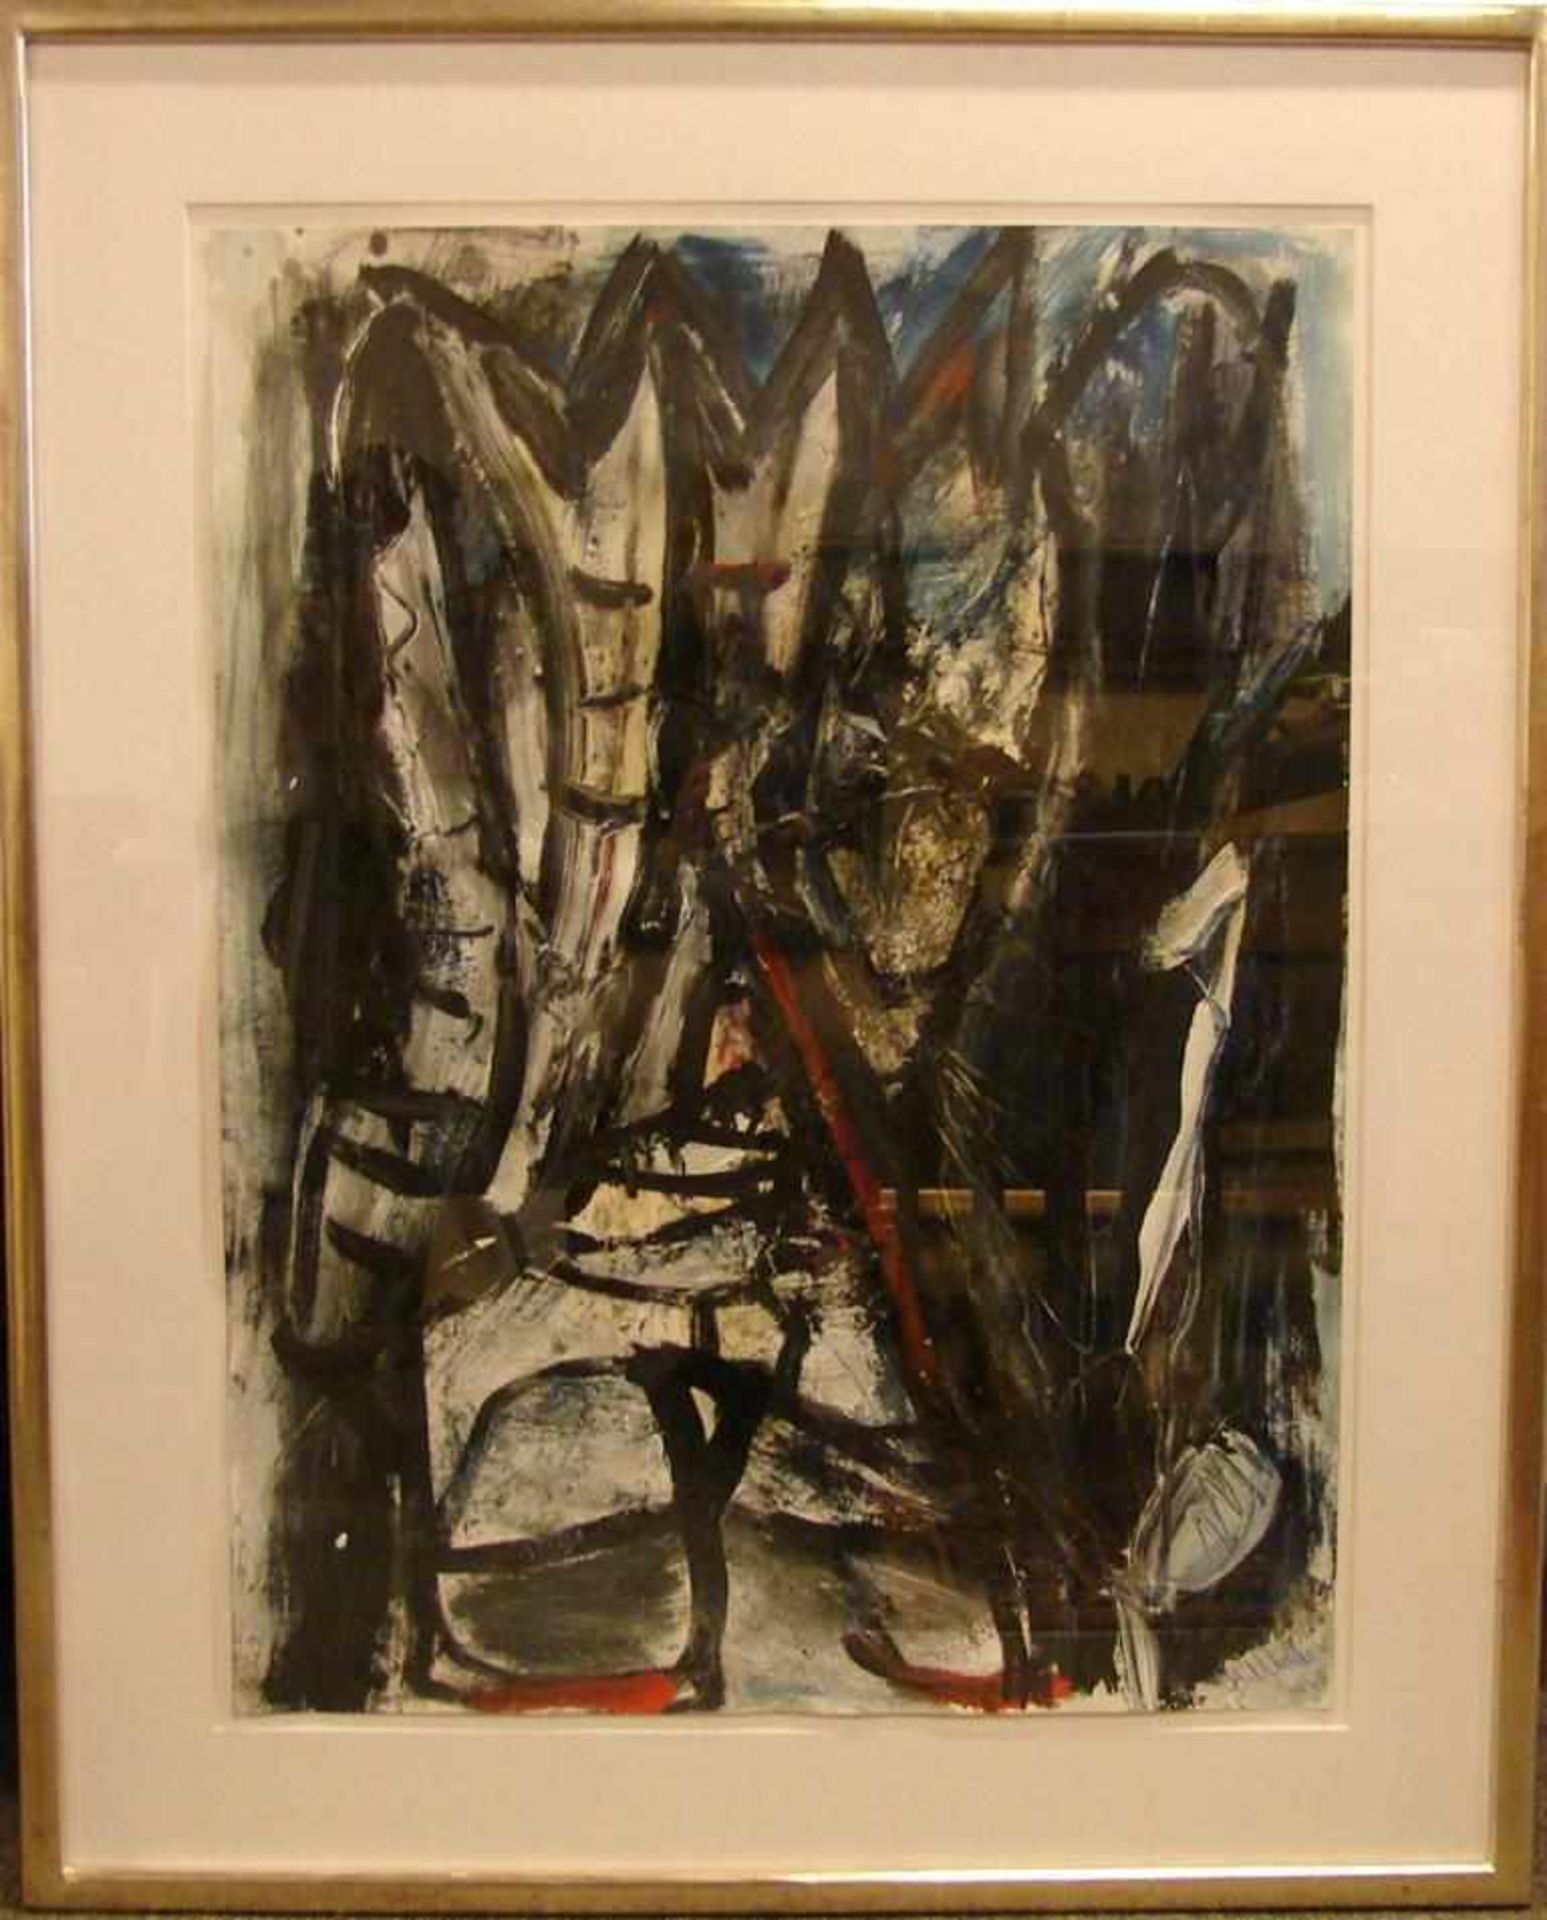 Wohl HEIKO MAULBECKER, "Abstrakte Komposition", Mischtechnik, u.re.sig., dat. 1960, ca. 67 x 90 cm